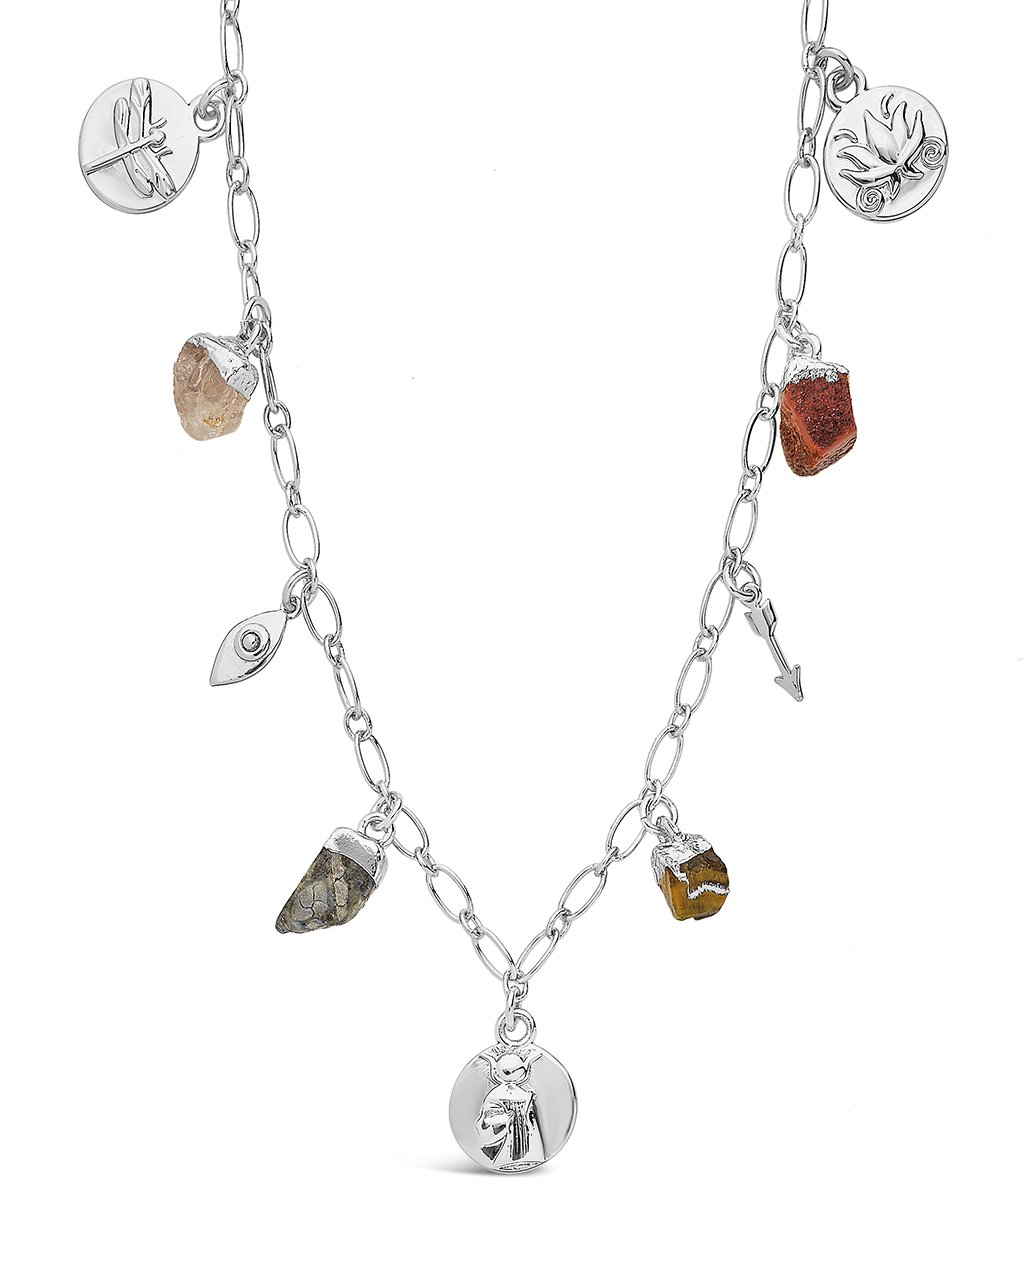 Silver Pendant Multiple Charm Heart & Key Necklace 28” Chain | eBay